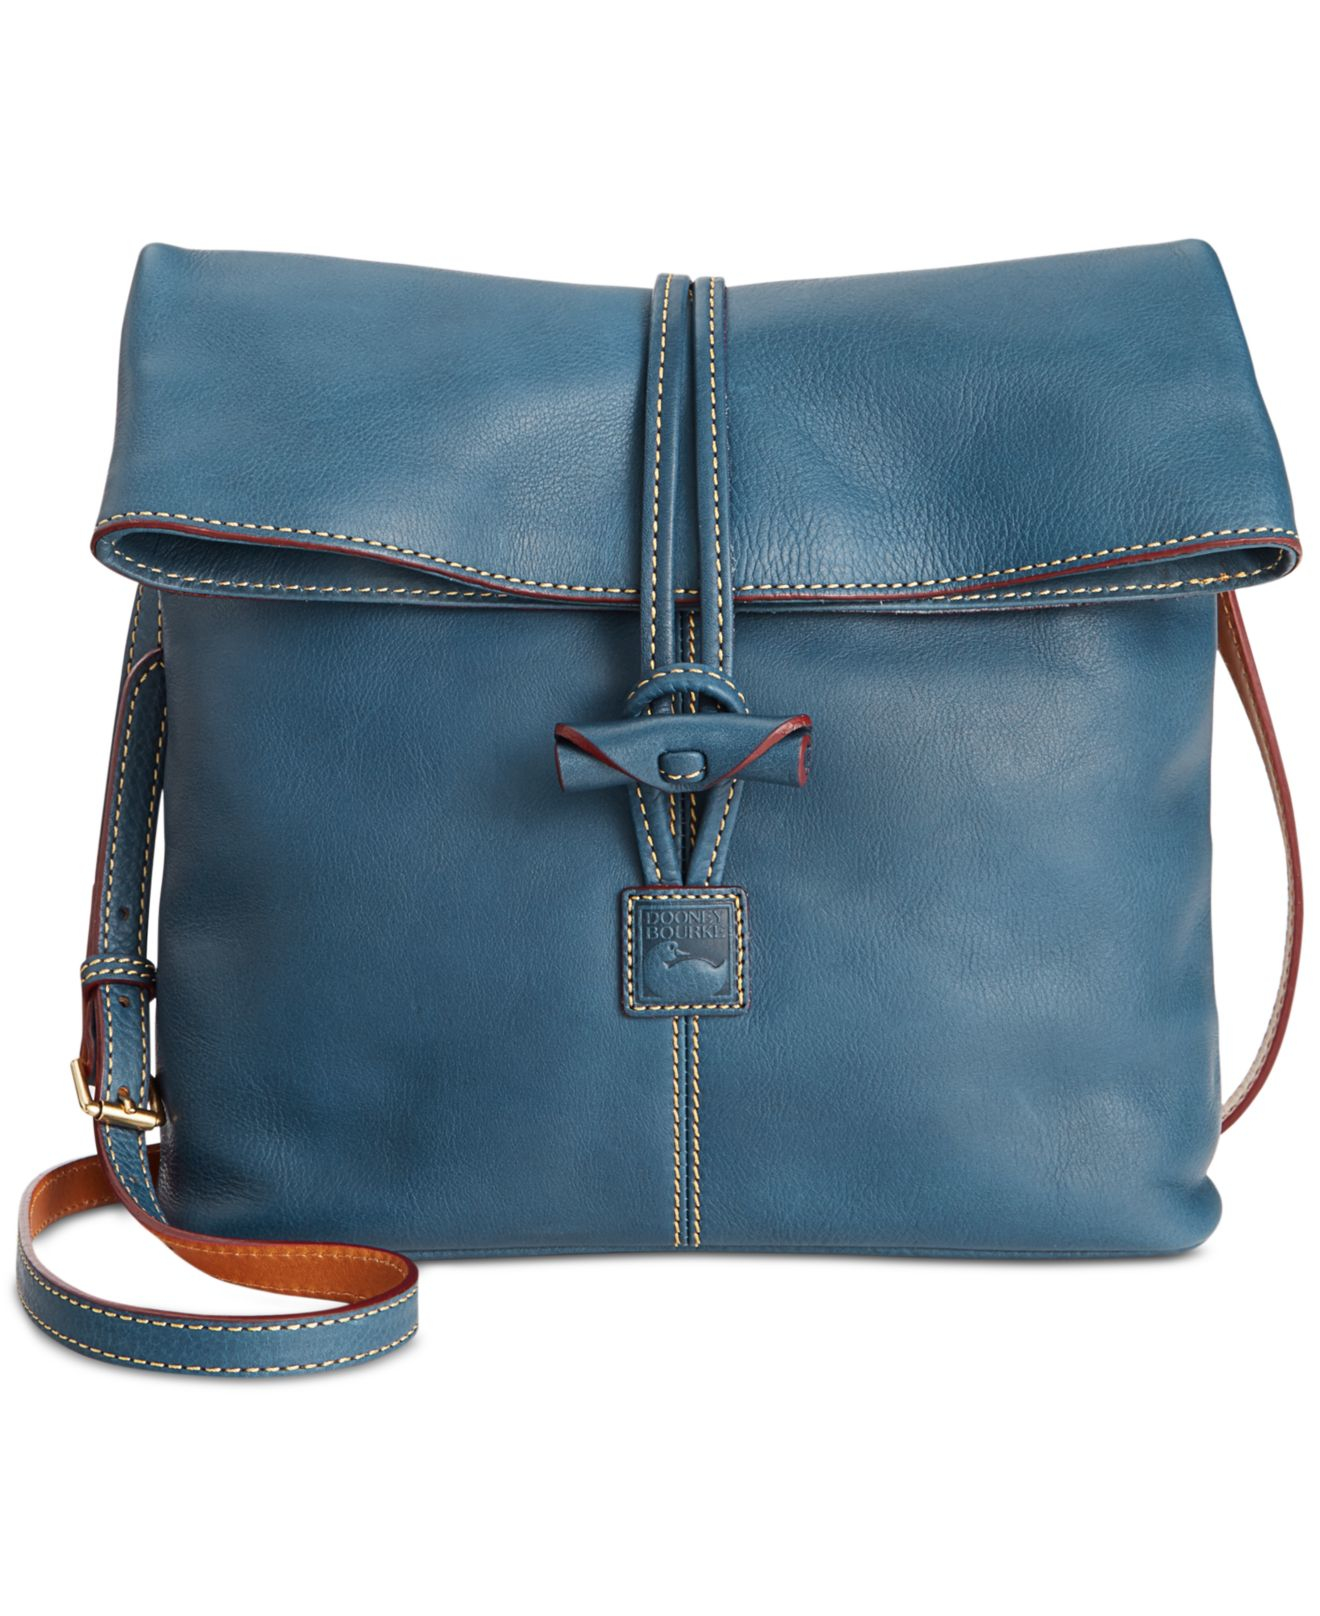 Lyst Dooney & Bourke Florentine Medium Toggle Crossbody Bag in Blue